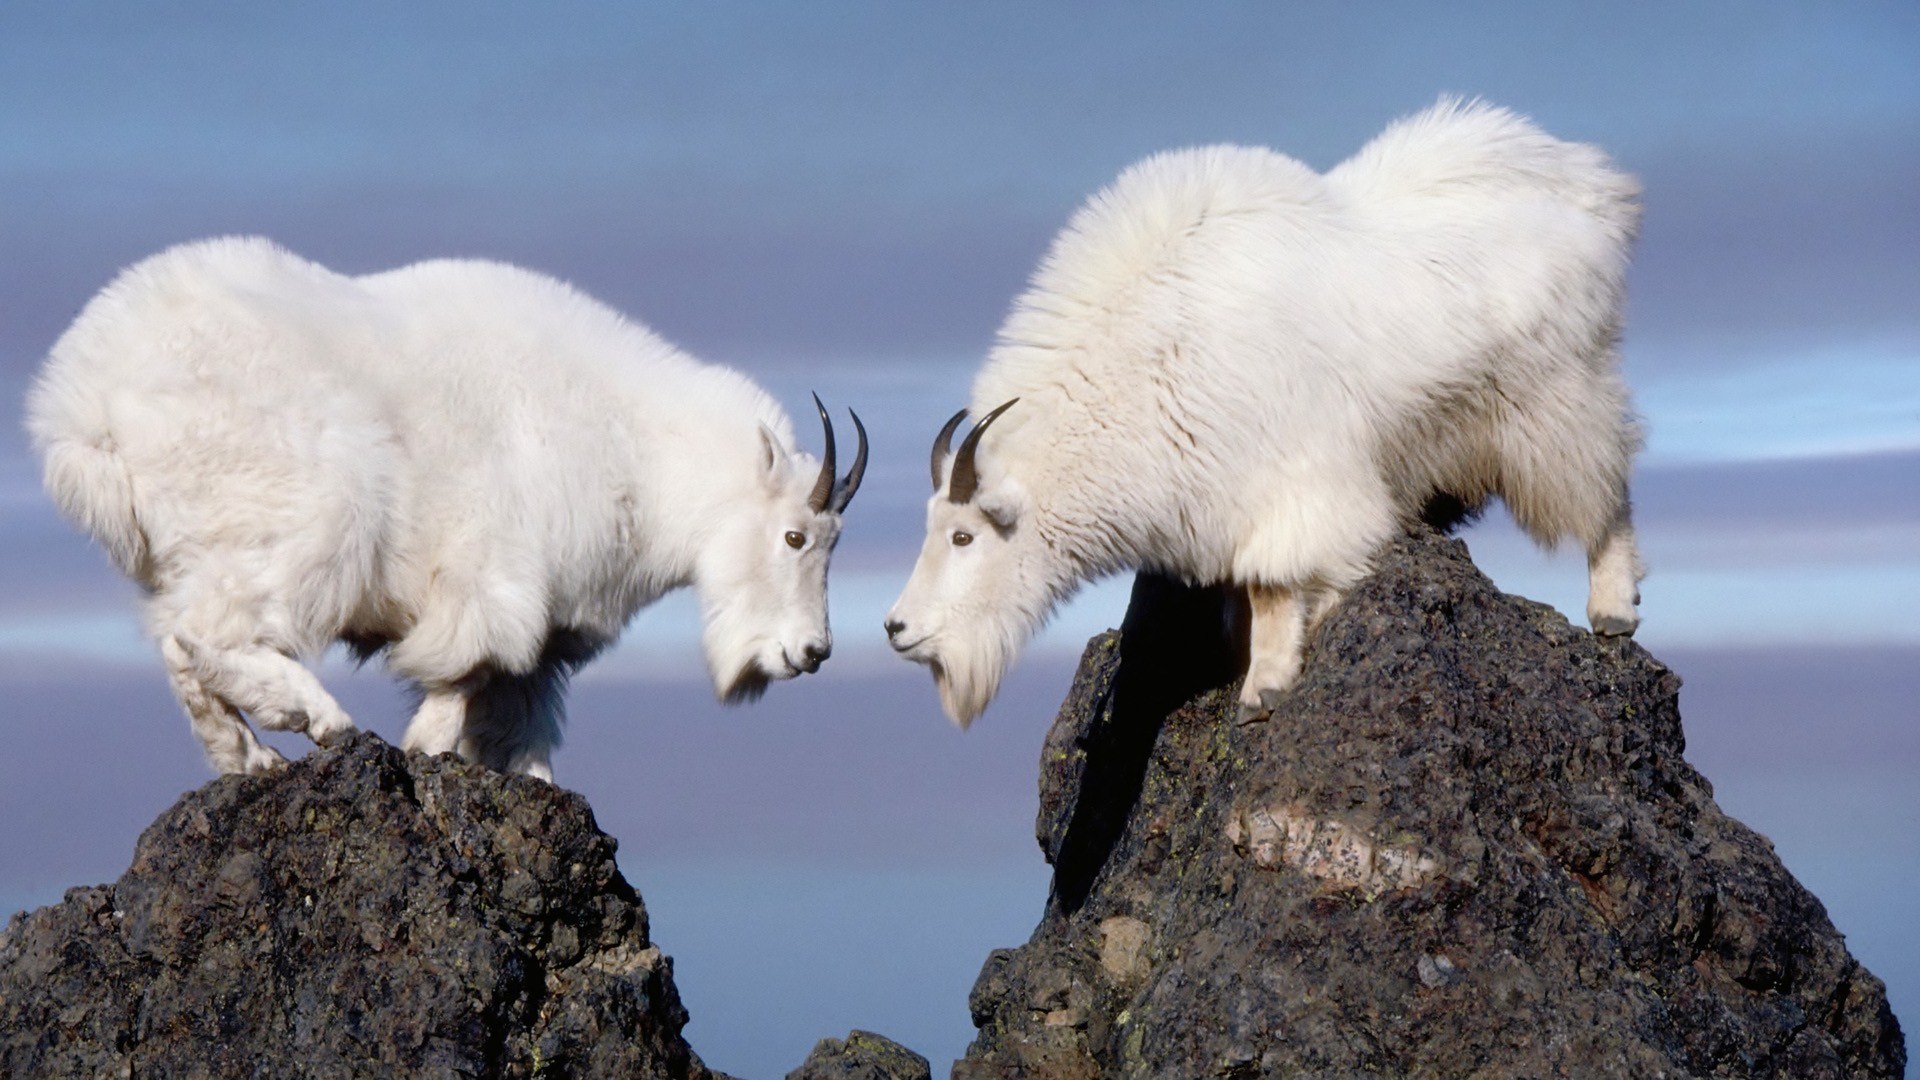 Animal Mountain Goat HD Wallpaper | Background Image